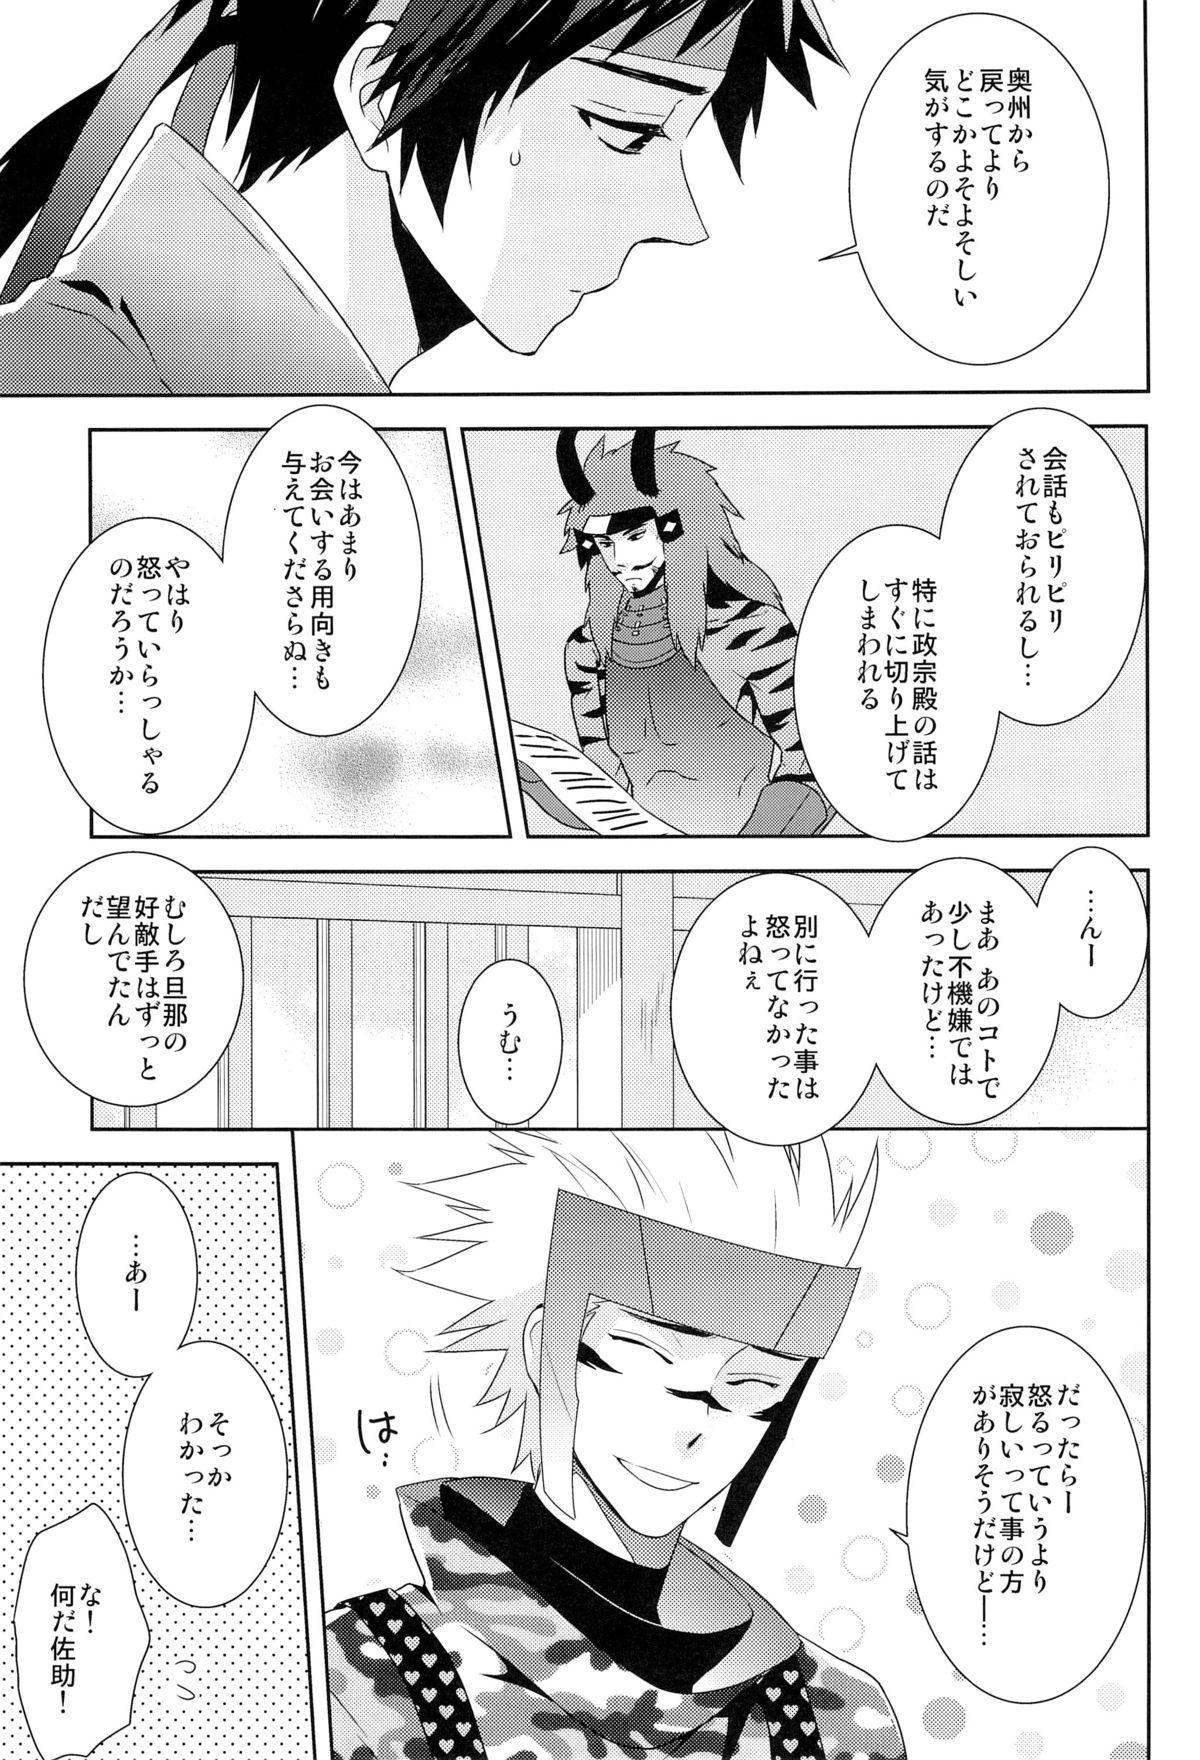 Milk envy - Sengoku basara Sexteen - Page 7